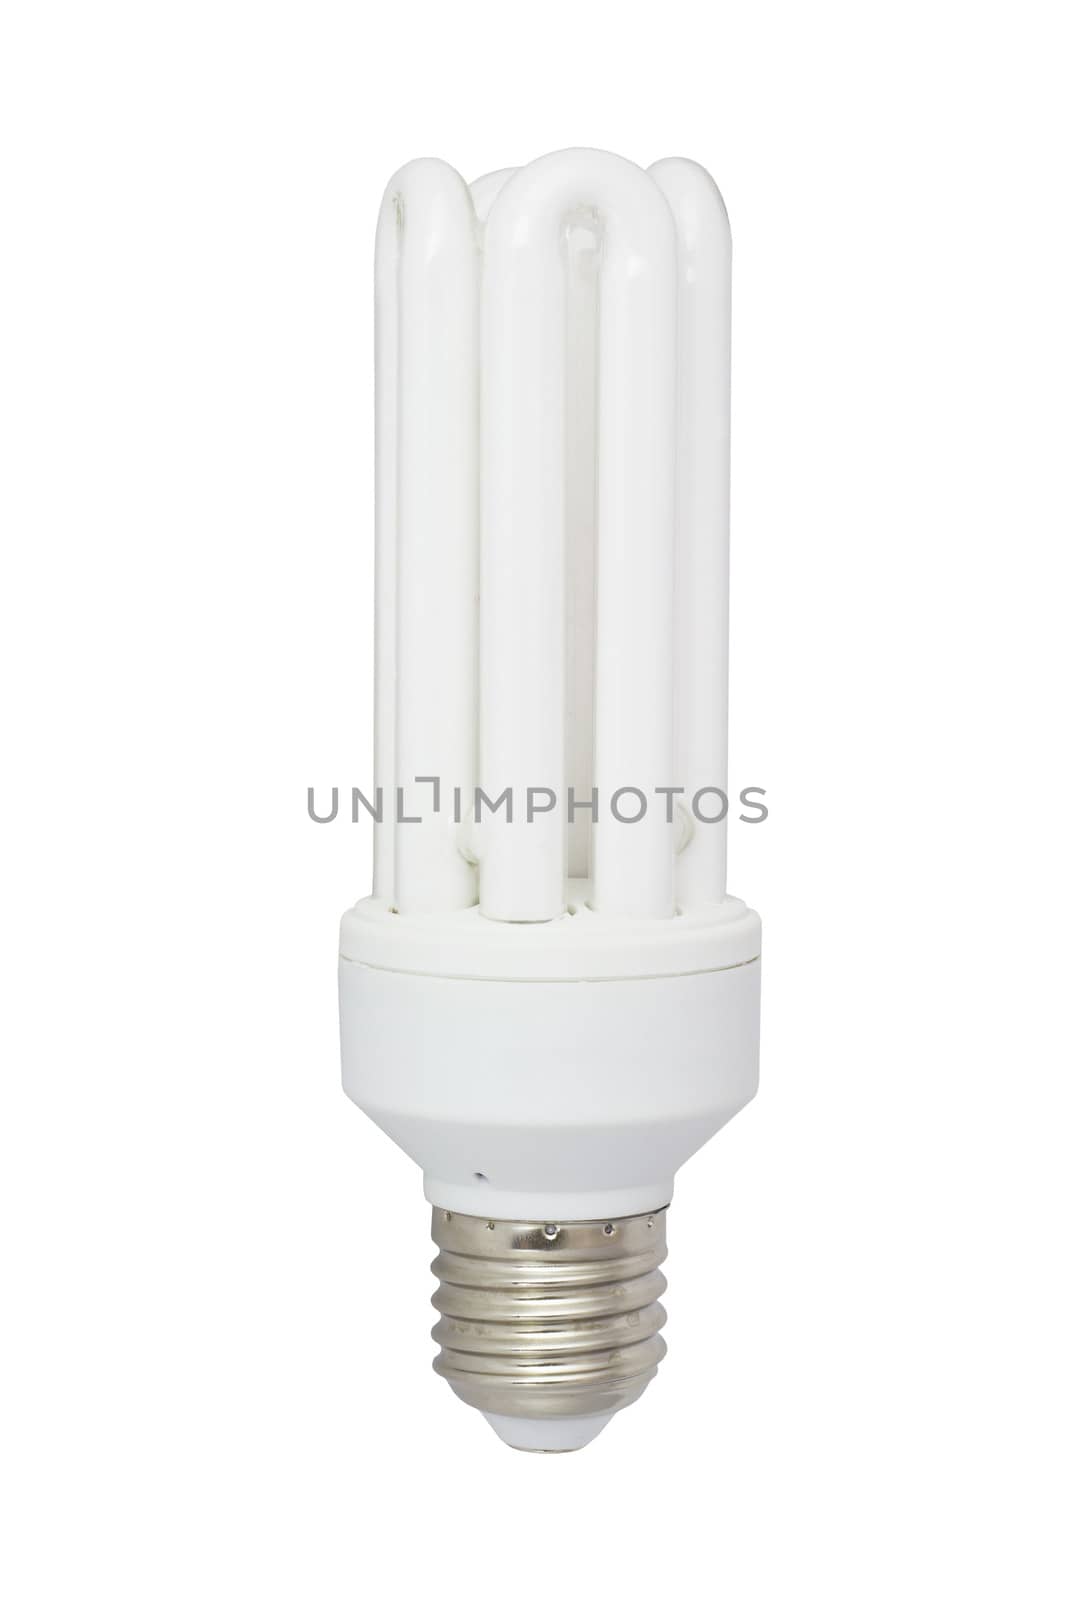 White fluorescent lamp by cherezoff